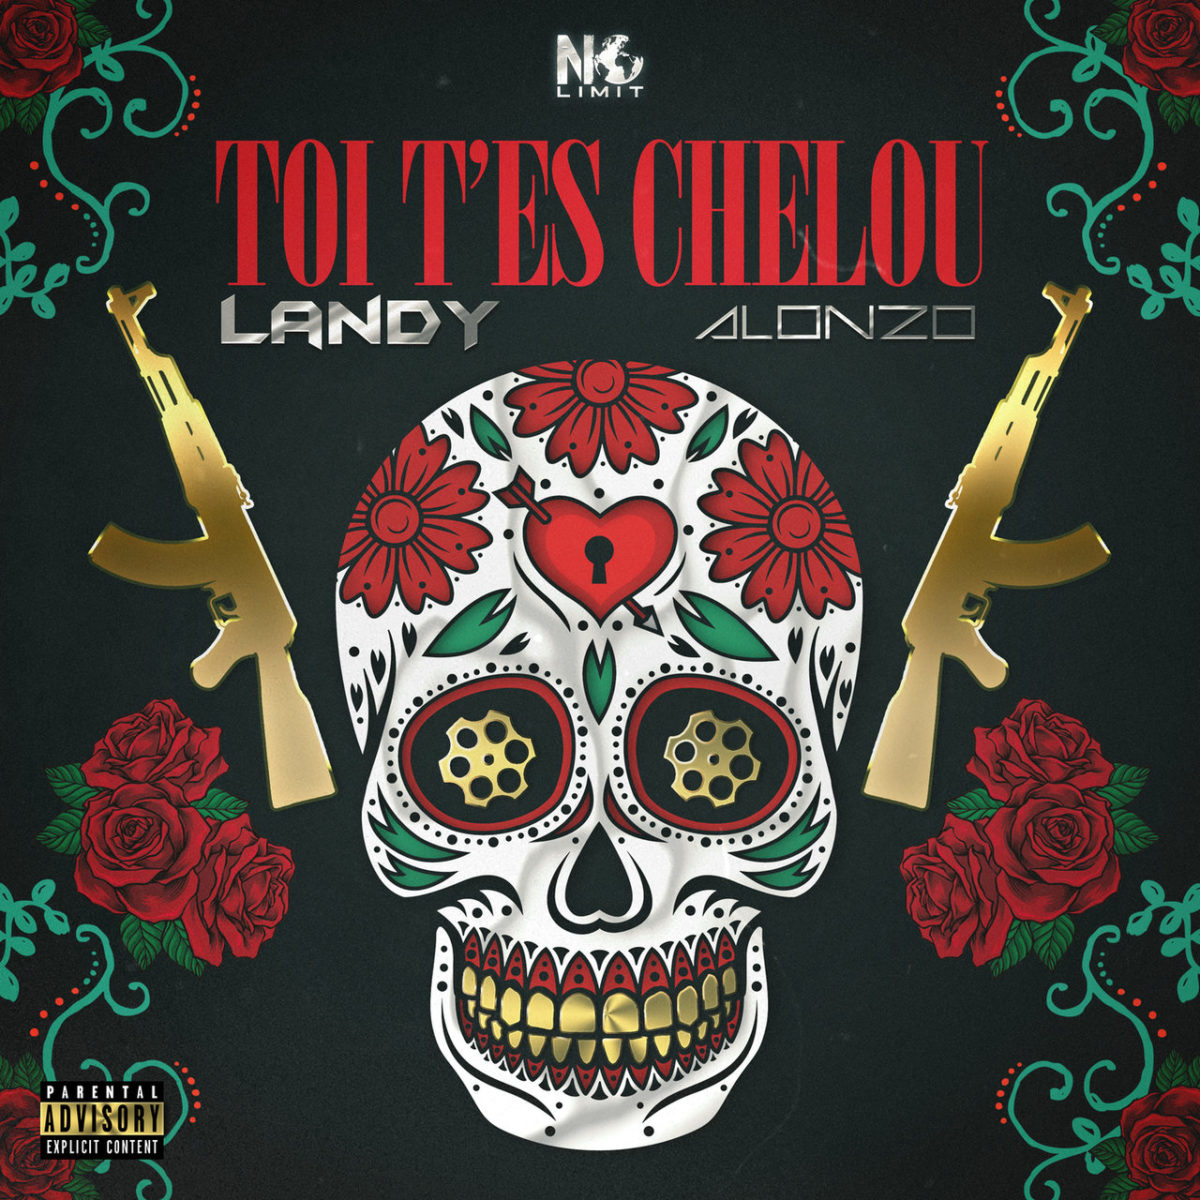 Landy - Toi T'es Chelou (ft. Alonzo) (Cover)